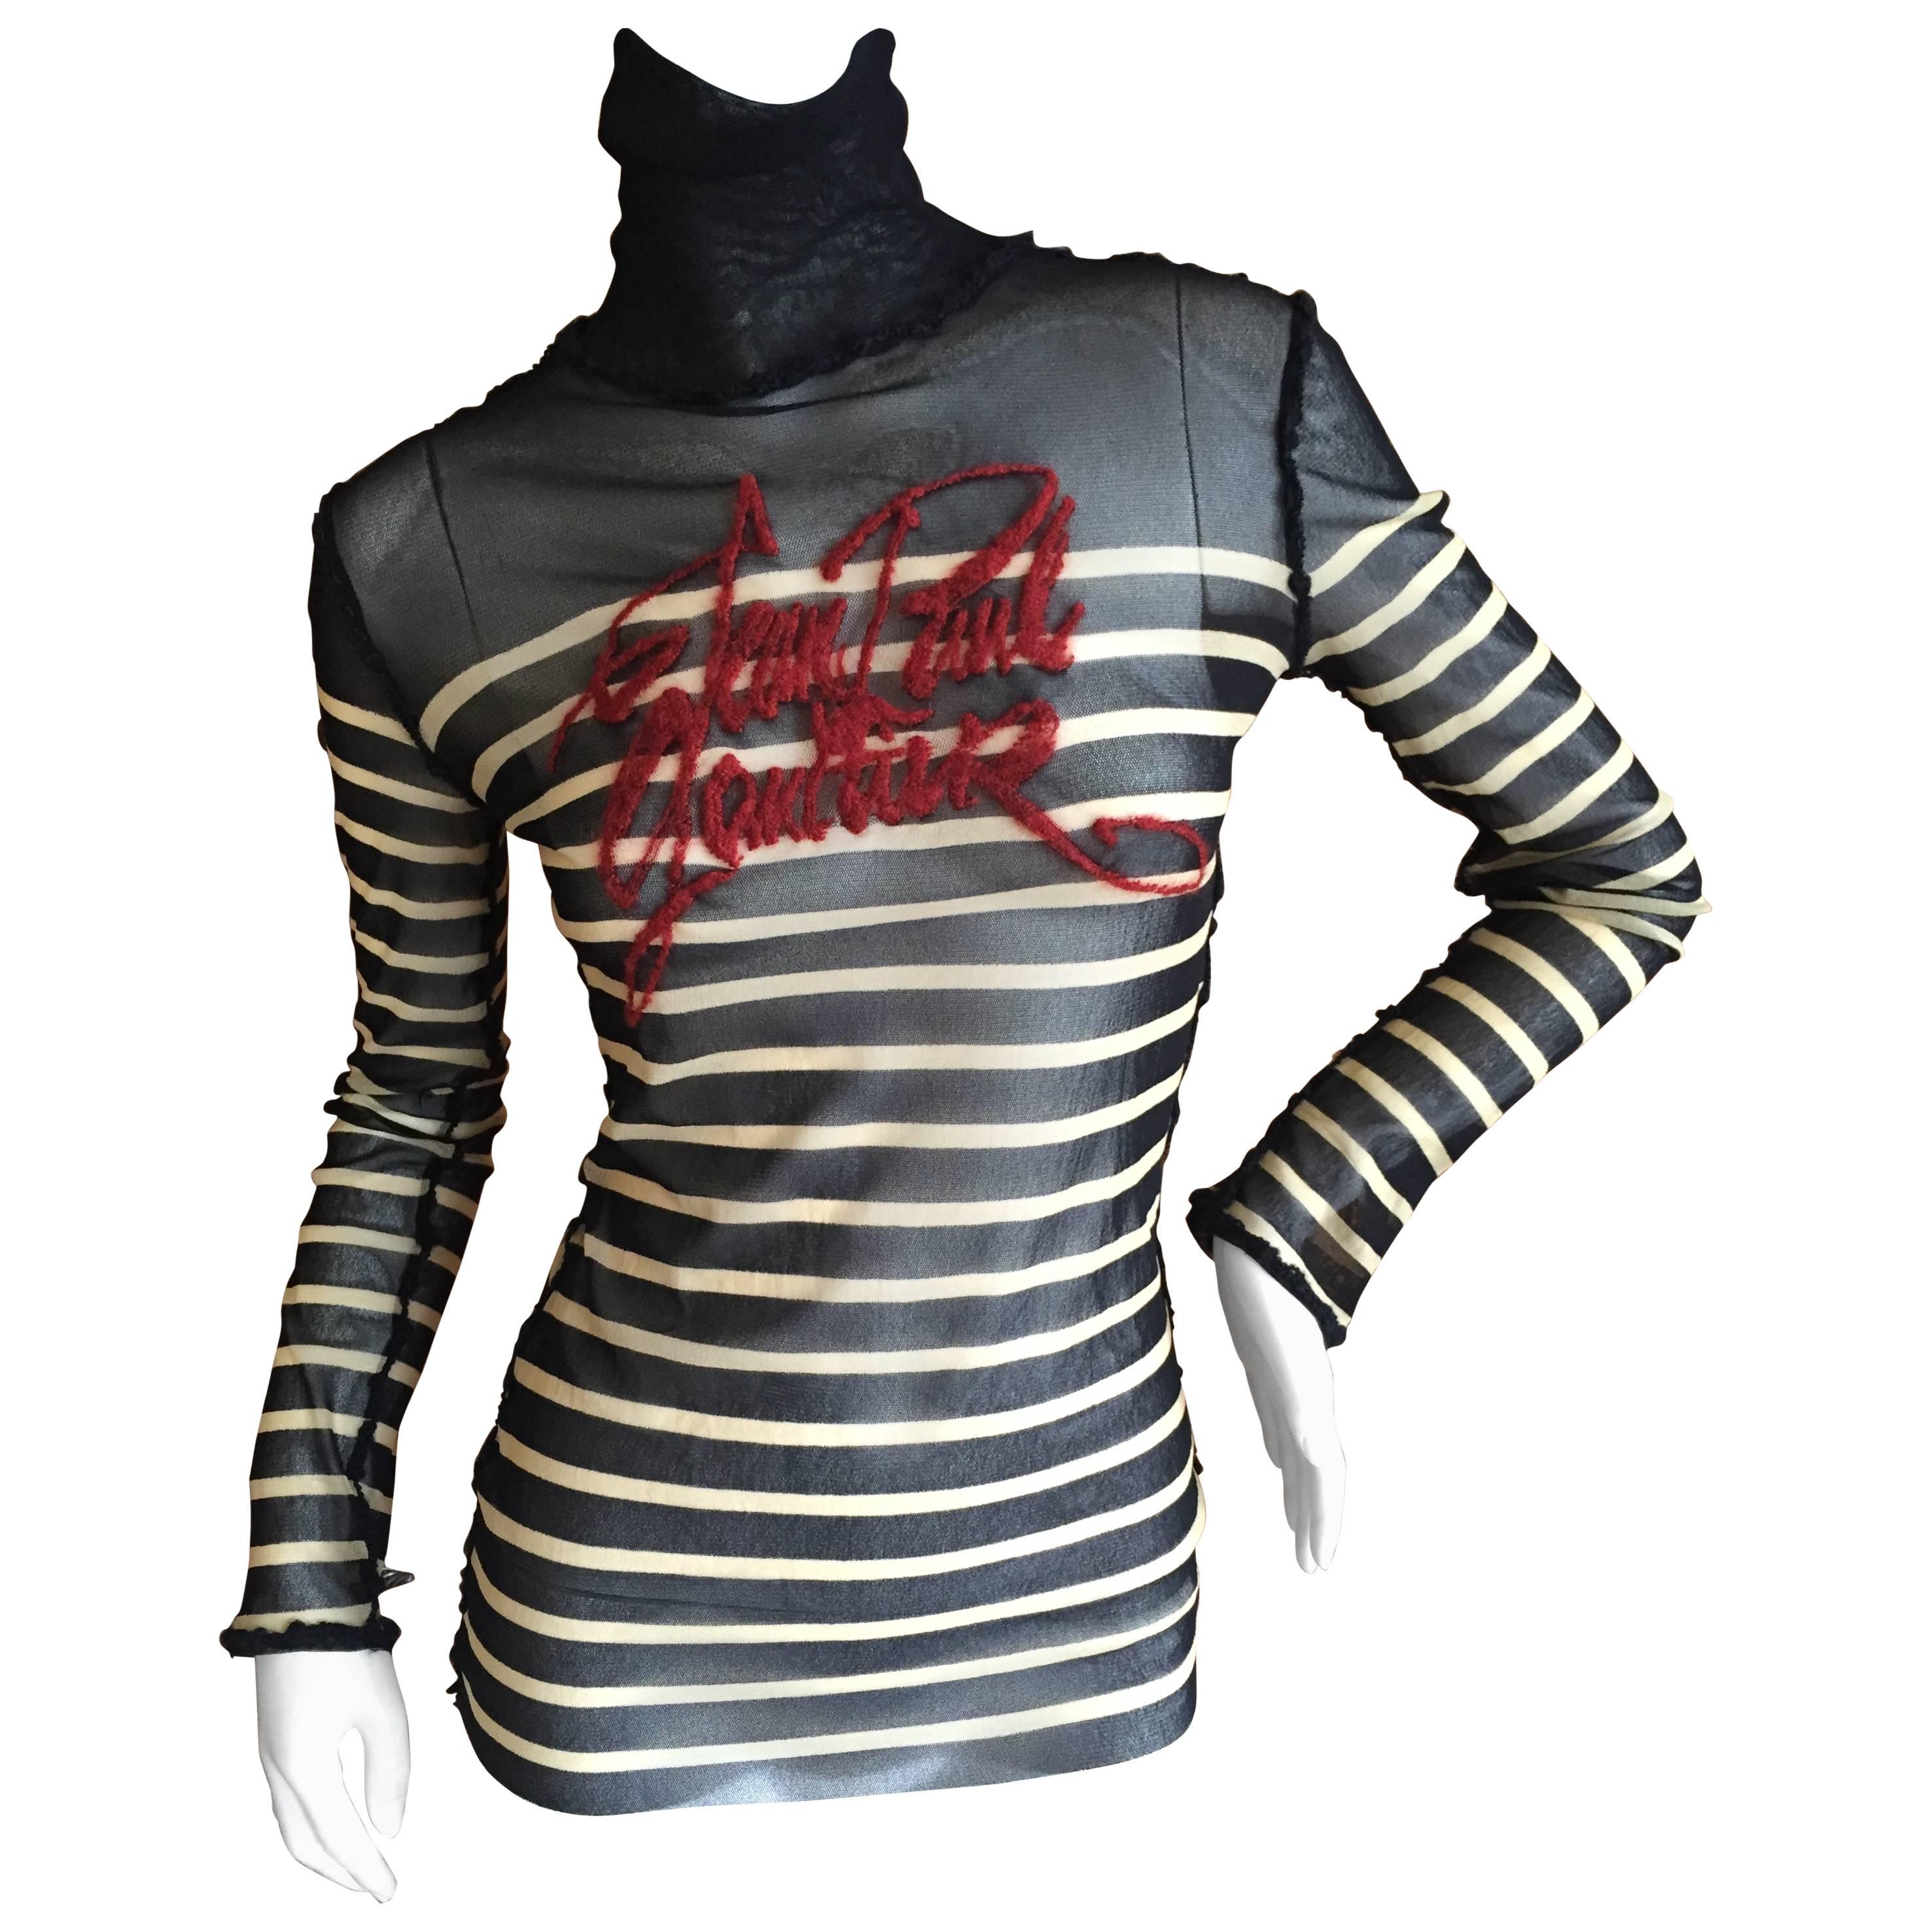 Jean Paul Gaultier Sheer Nautical Stripe Top with JPG Signature Script For Sale